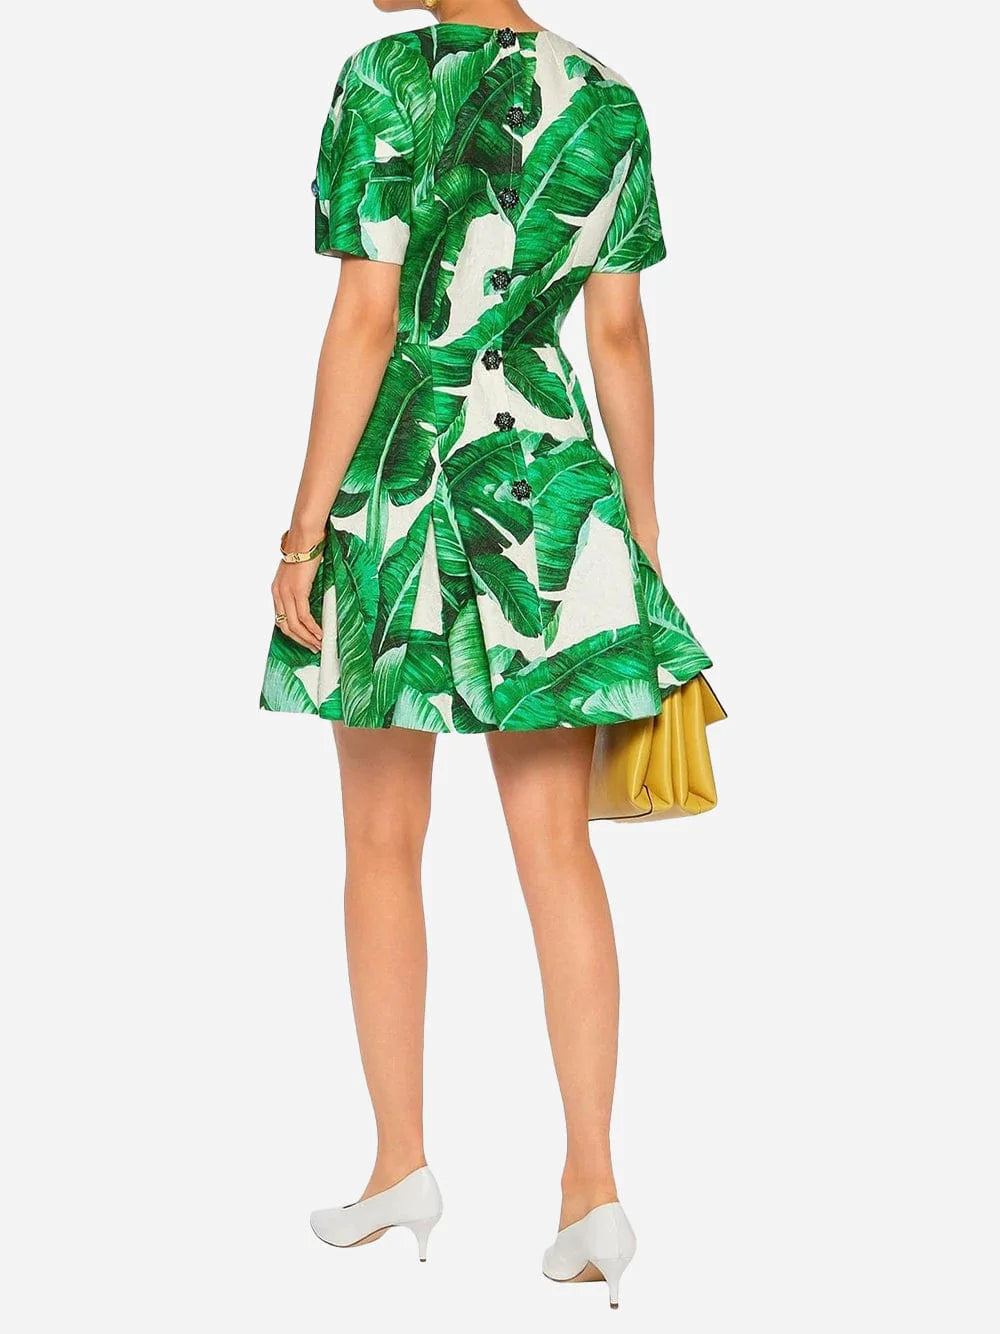 Dolce & Gabbana Banana Leaf Pineapple Embellished Dress